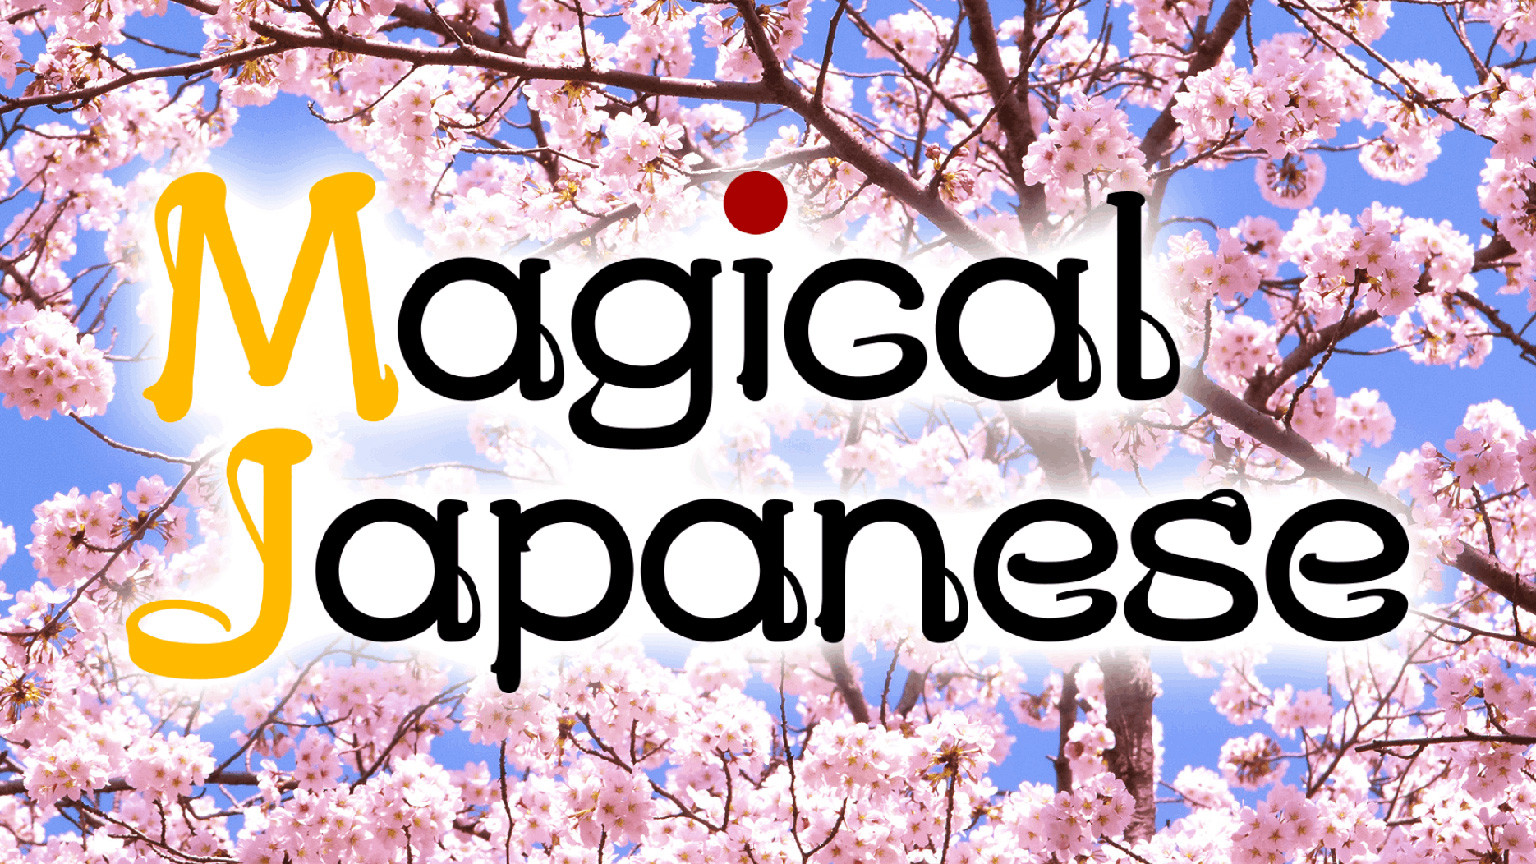 奇妙的日語
Magical Japanese